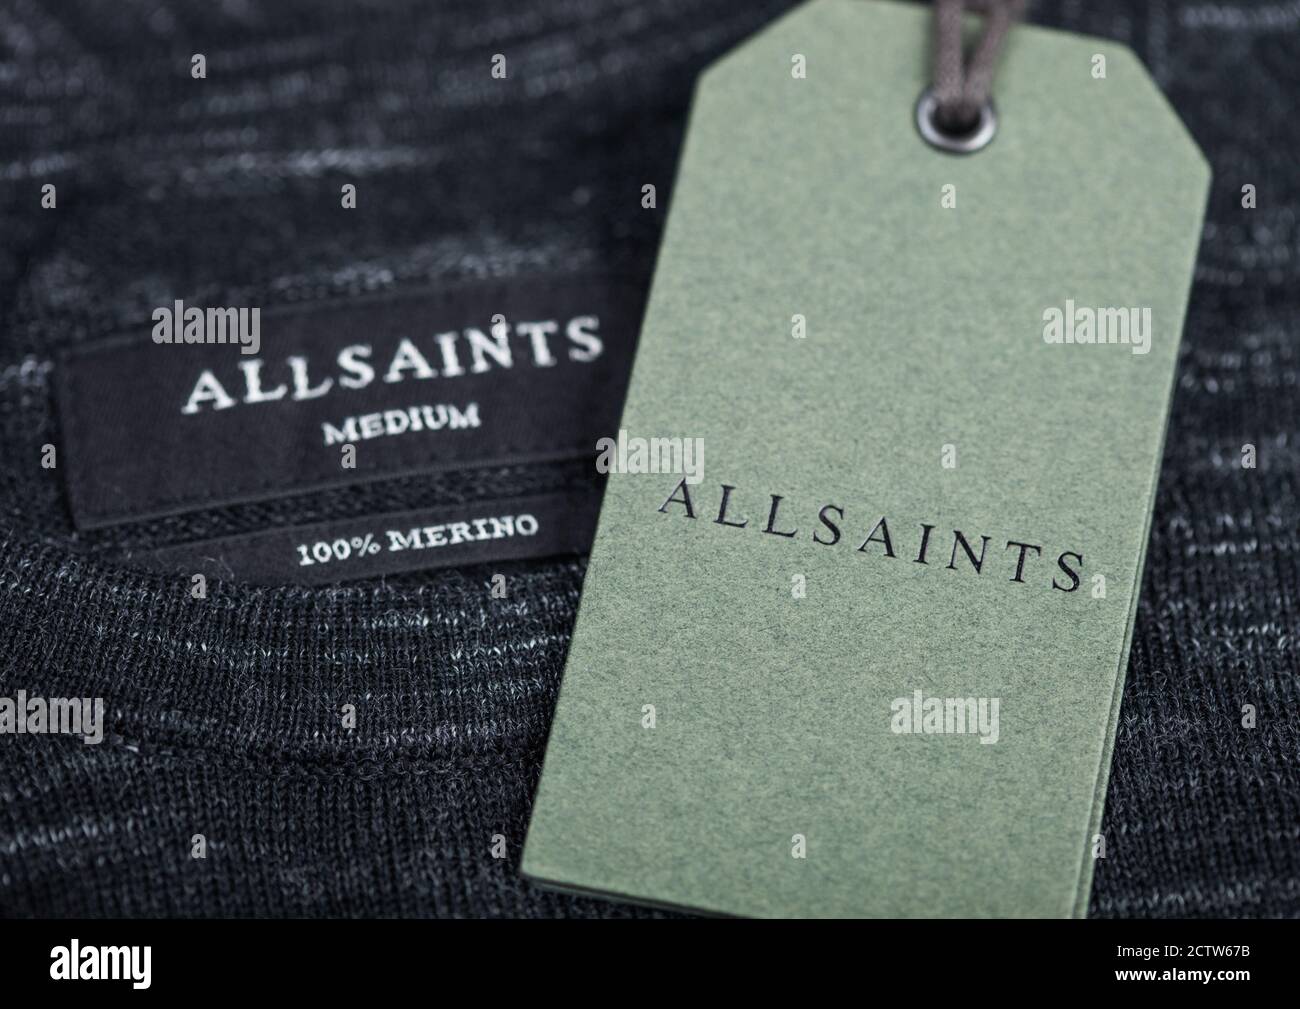 Sale allsaints fashion store shop hi-res stock photography and images -  Alamy